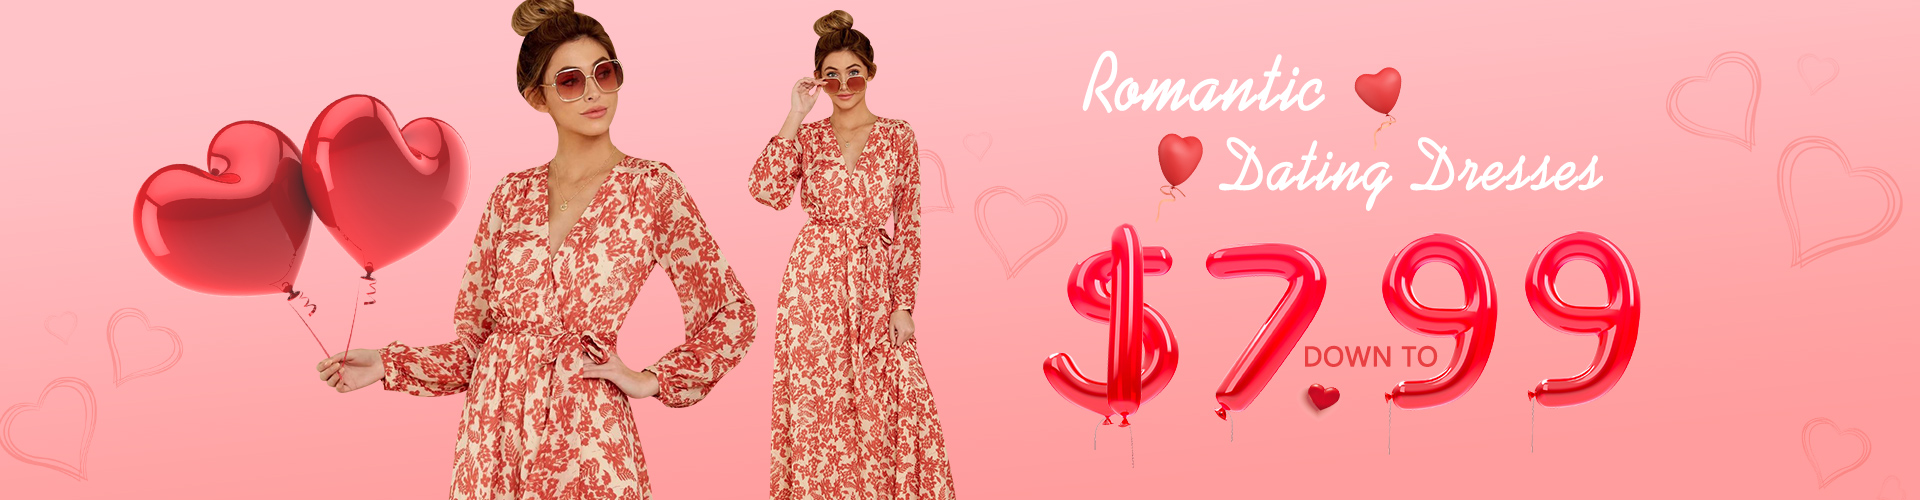 romantic dating dresses on sale